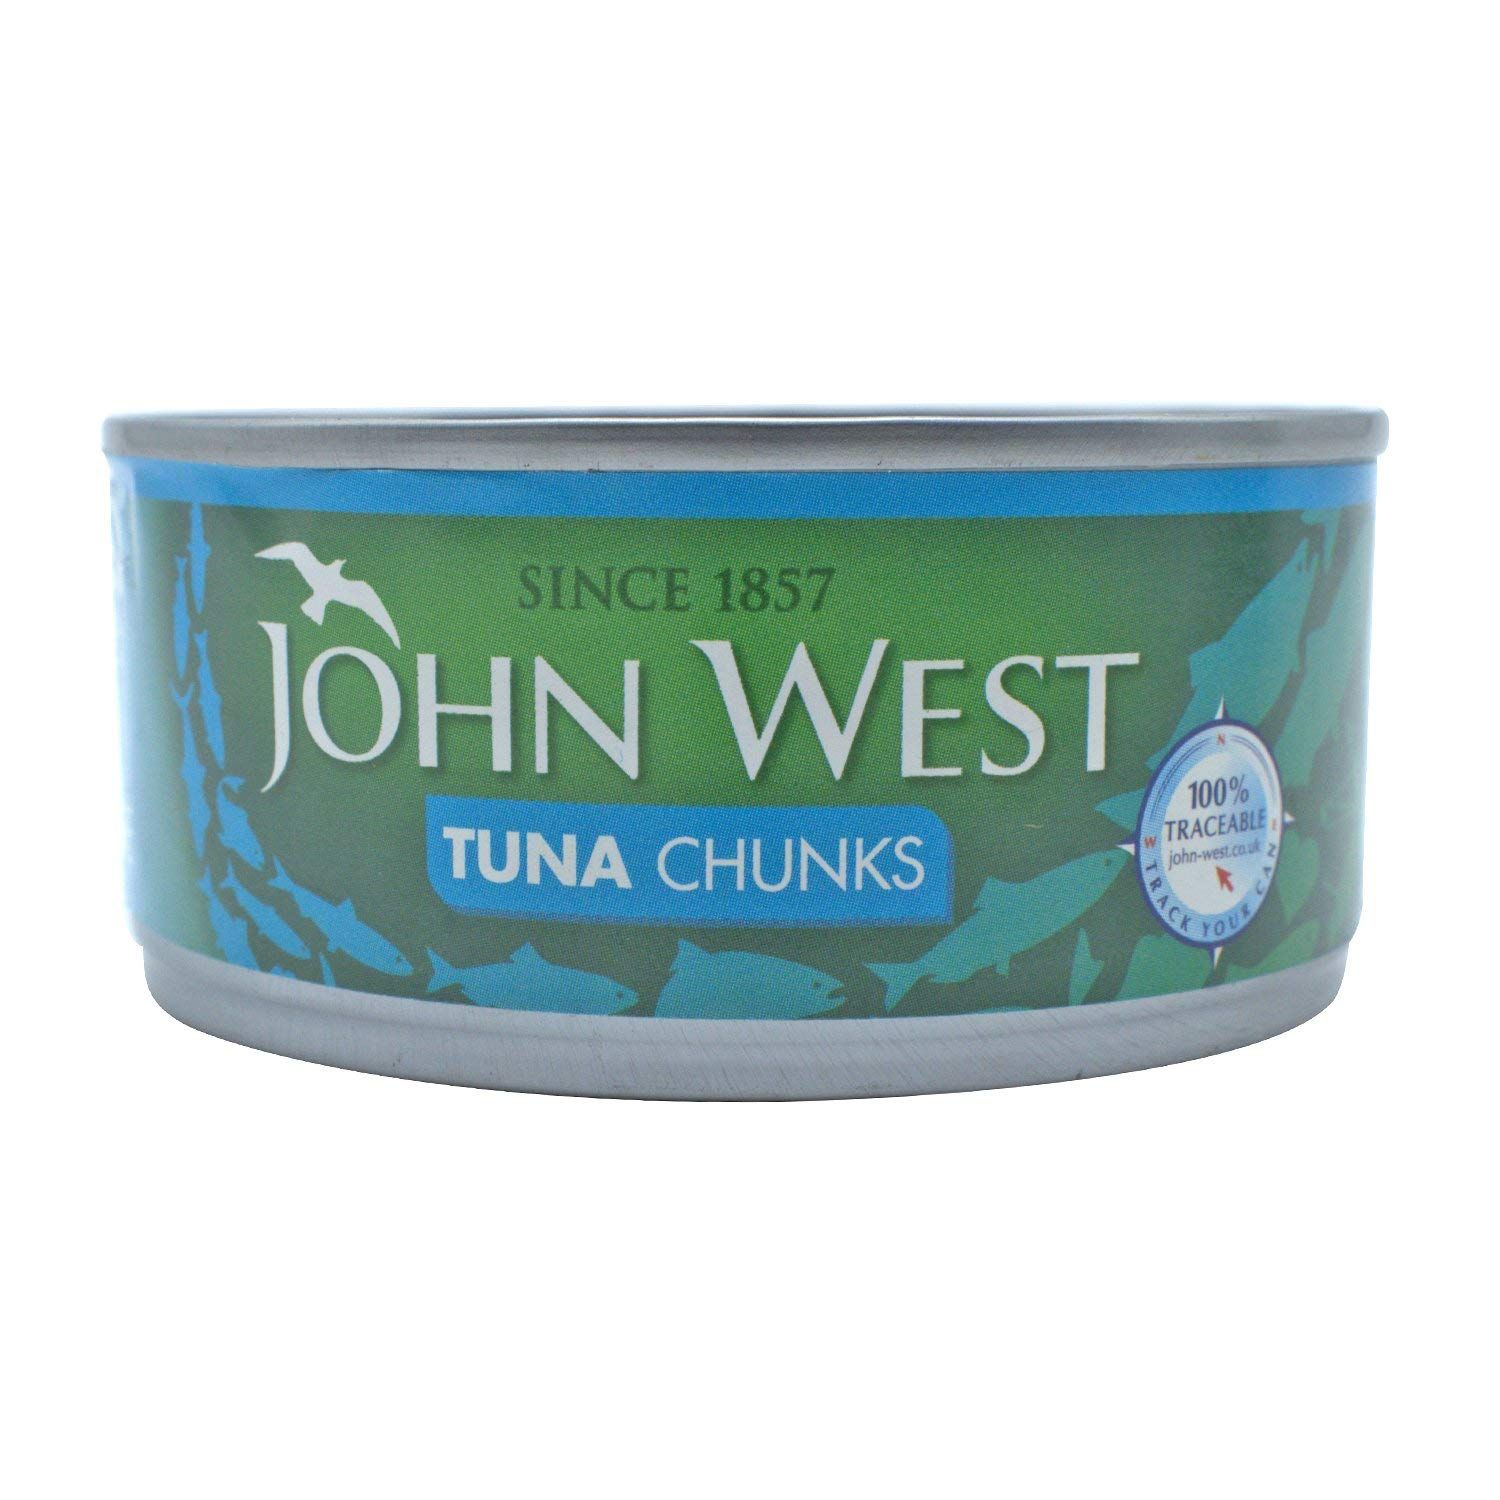 John West Tuna Chunks Image